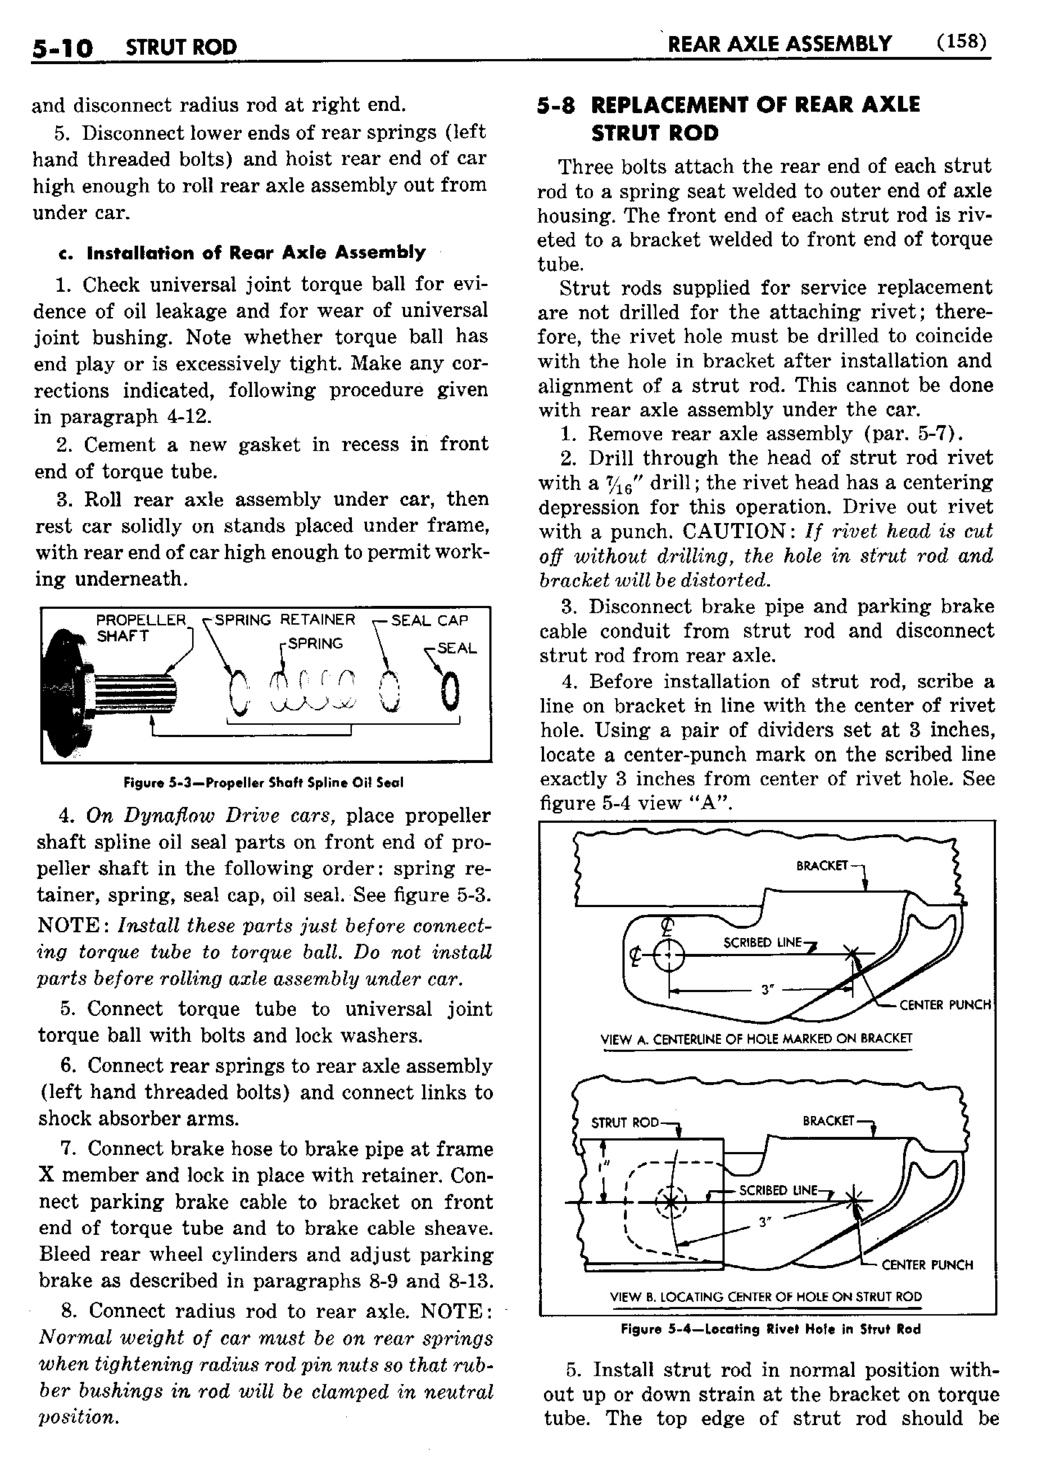 n_06 1950 Buick Shop Manual - Rear Axle-010-010.jpg